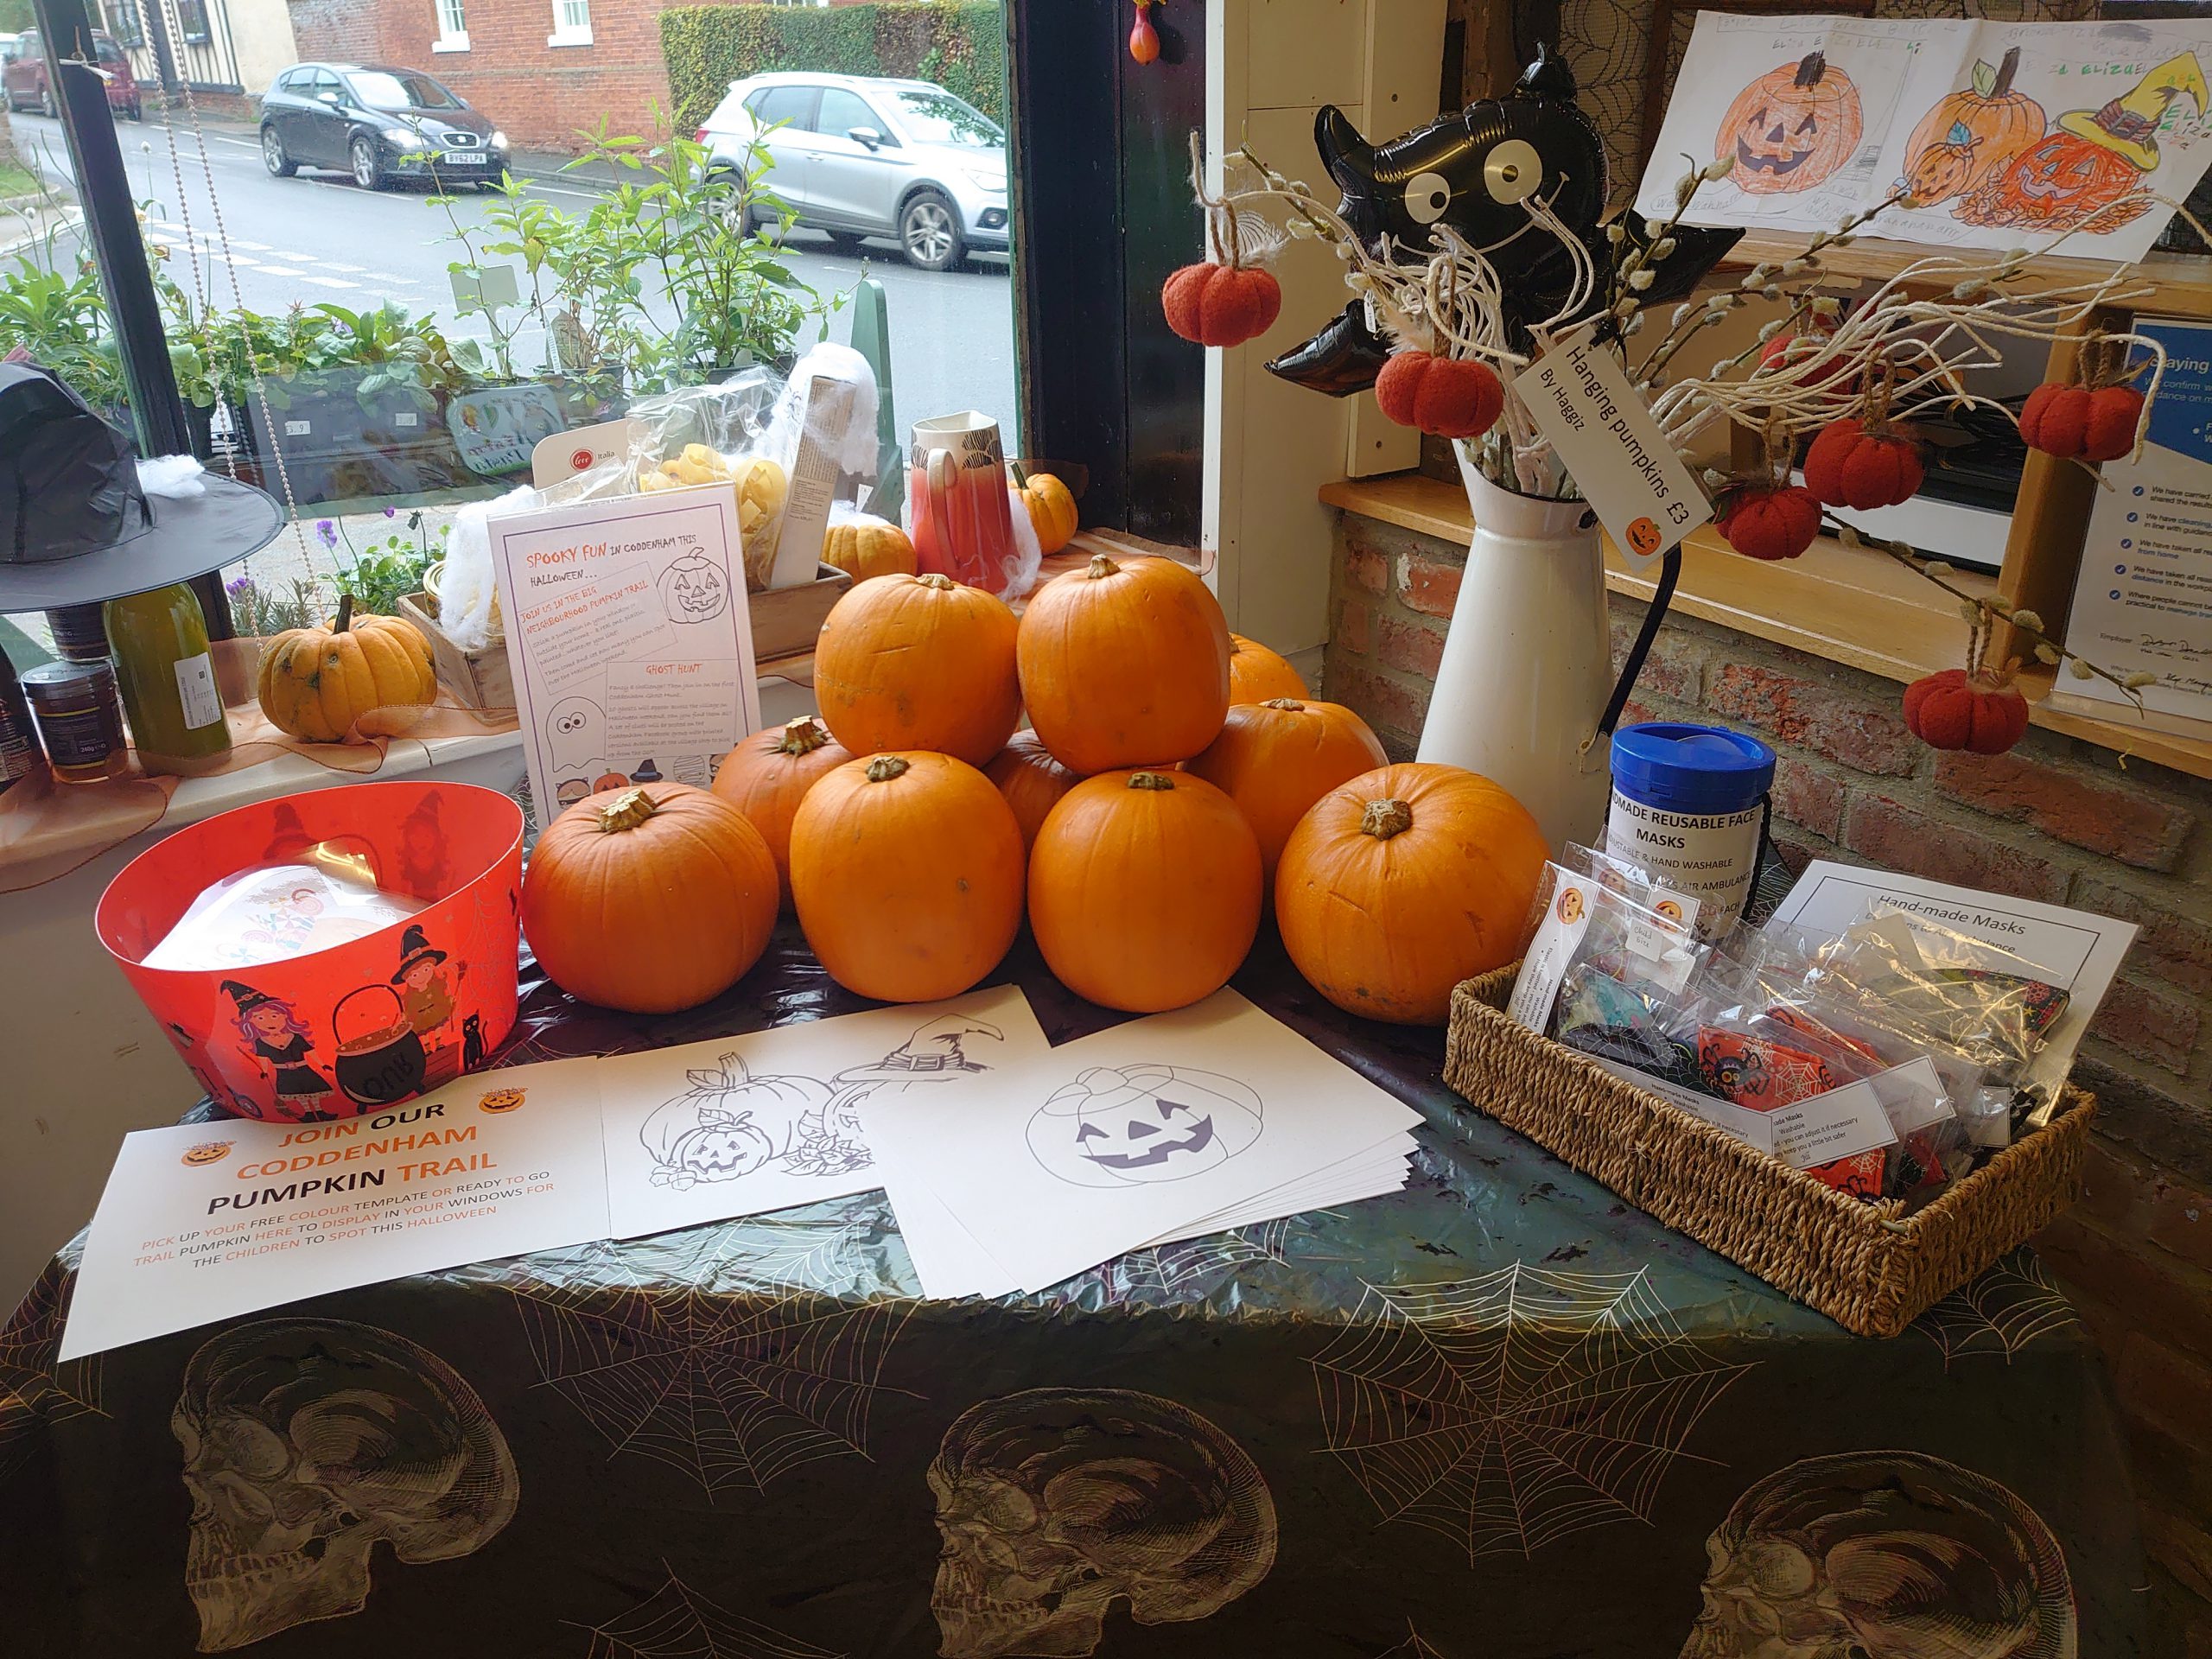 Pumpkins on display in the Coddenham Community Shop